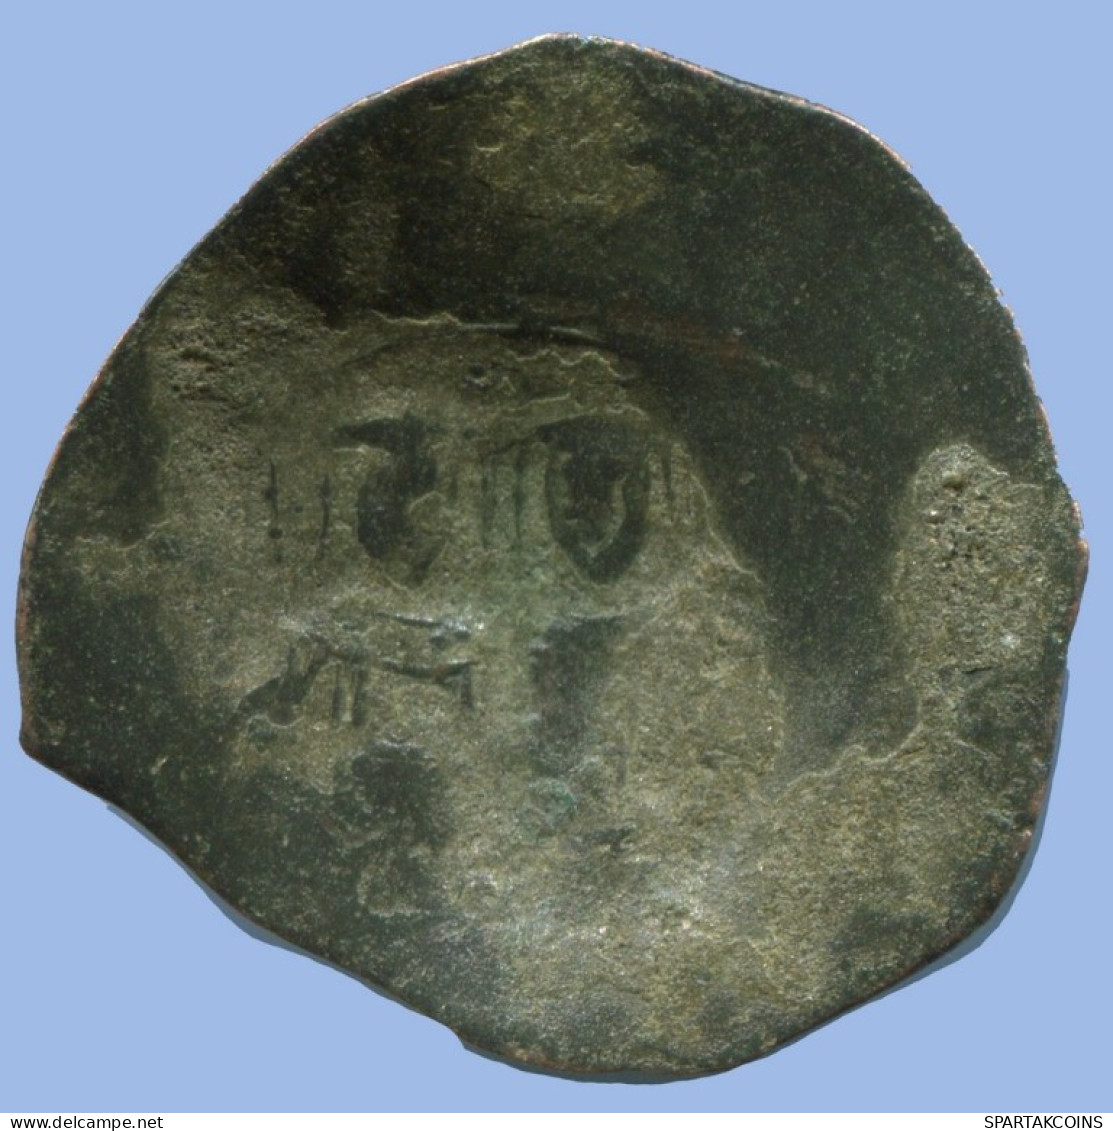 ALEXIOS III ANGELOS ASPRON TRACHY BILLON BYZANTINE Coin 2.1g/24mm #AB449.9.U.A - Byzantinische Münzen